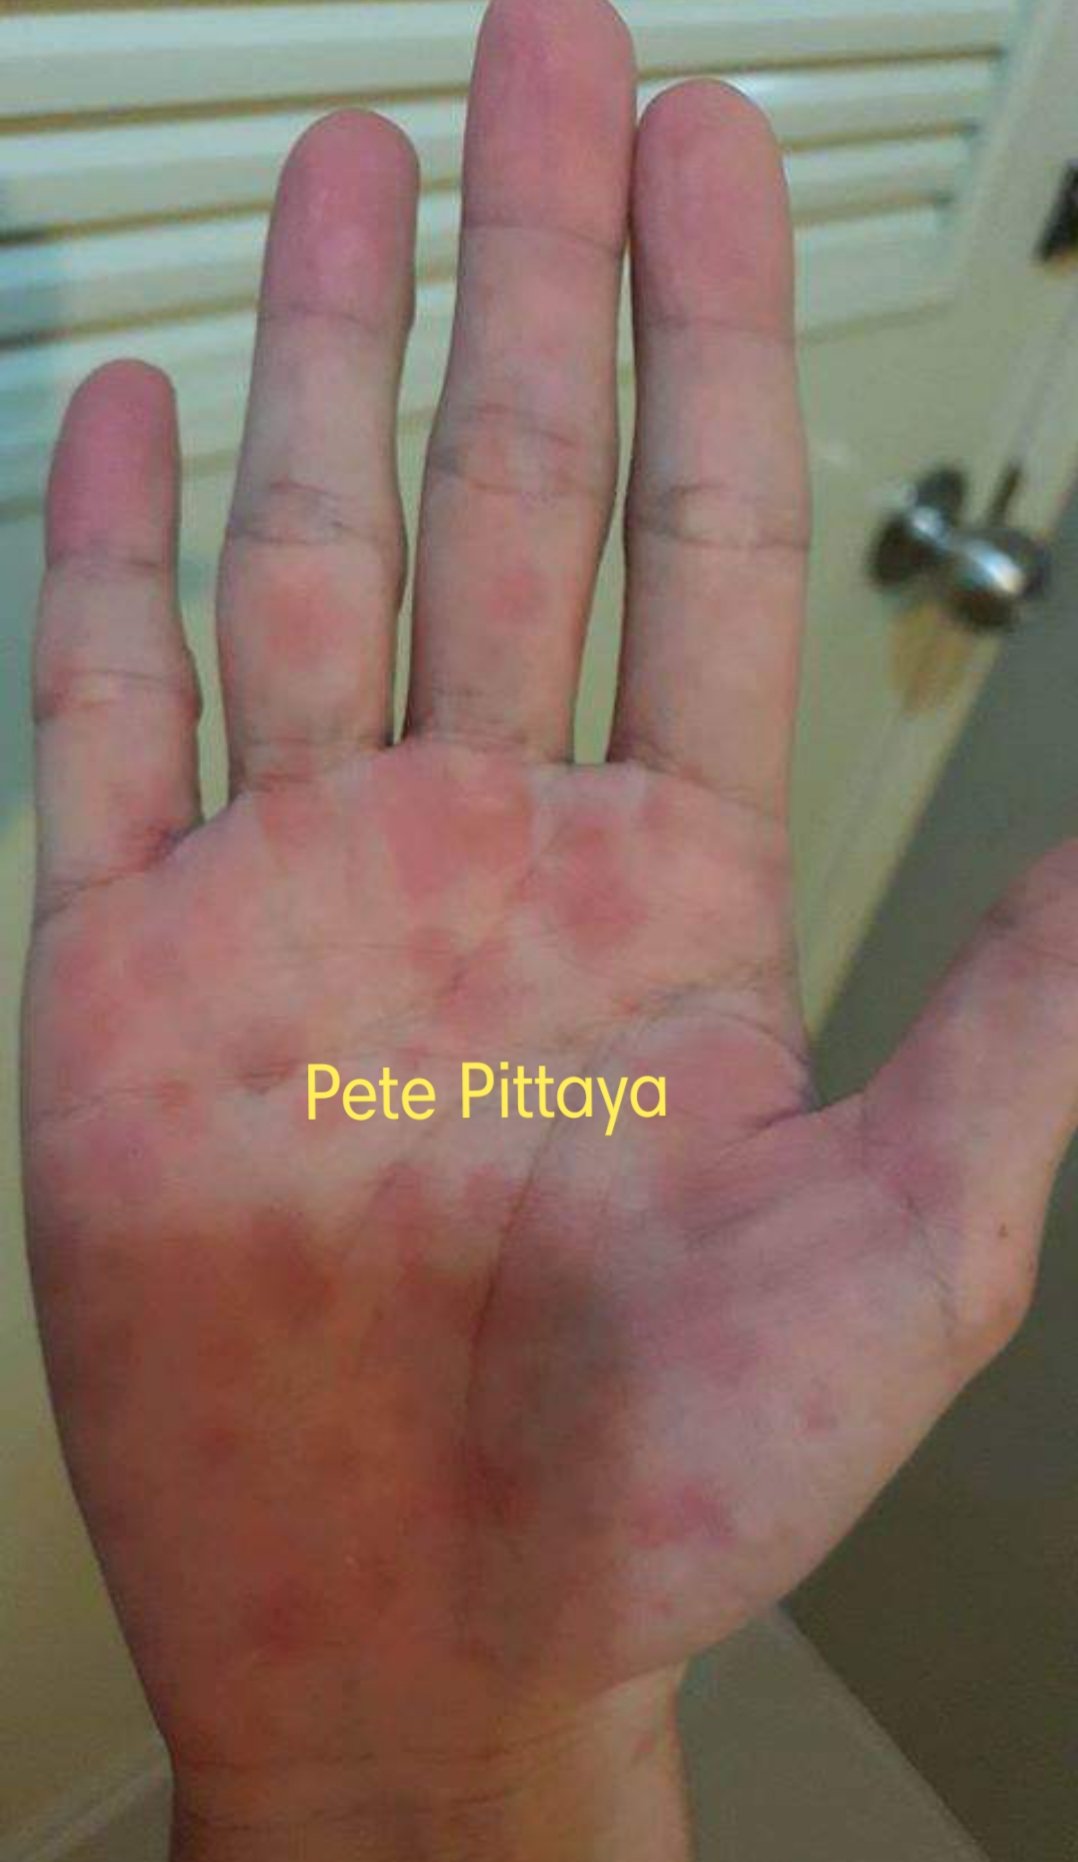 Pete Pittaya On Twitter: 